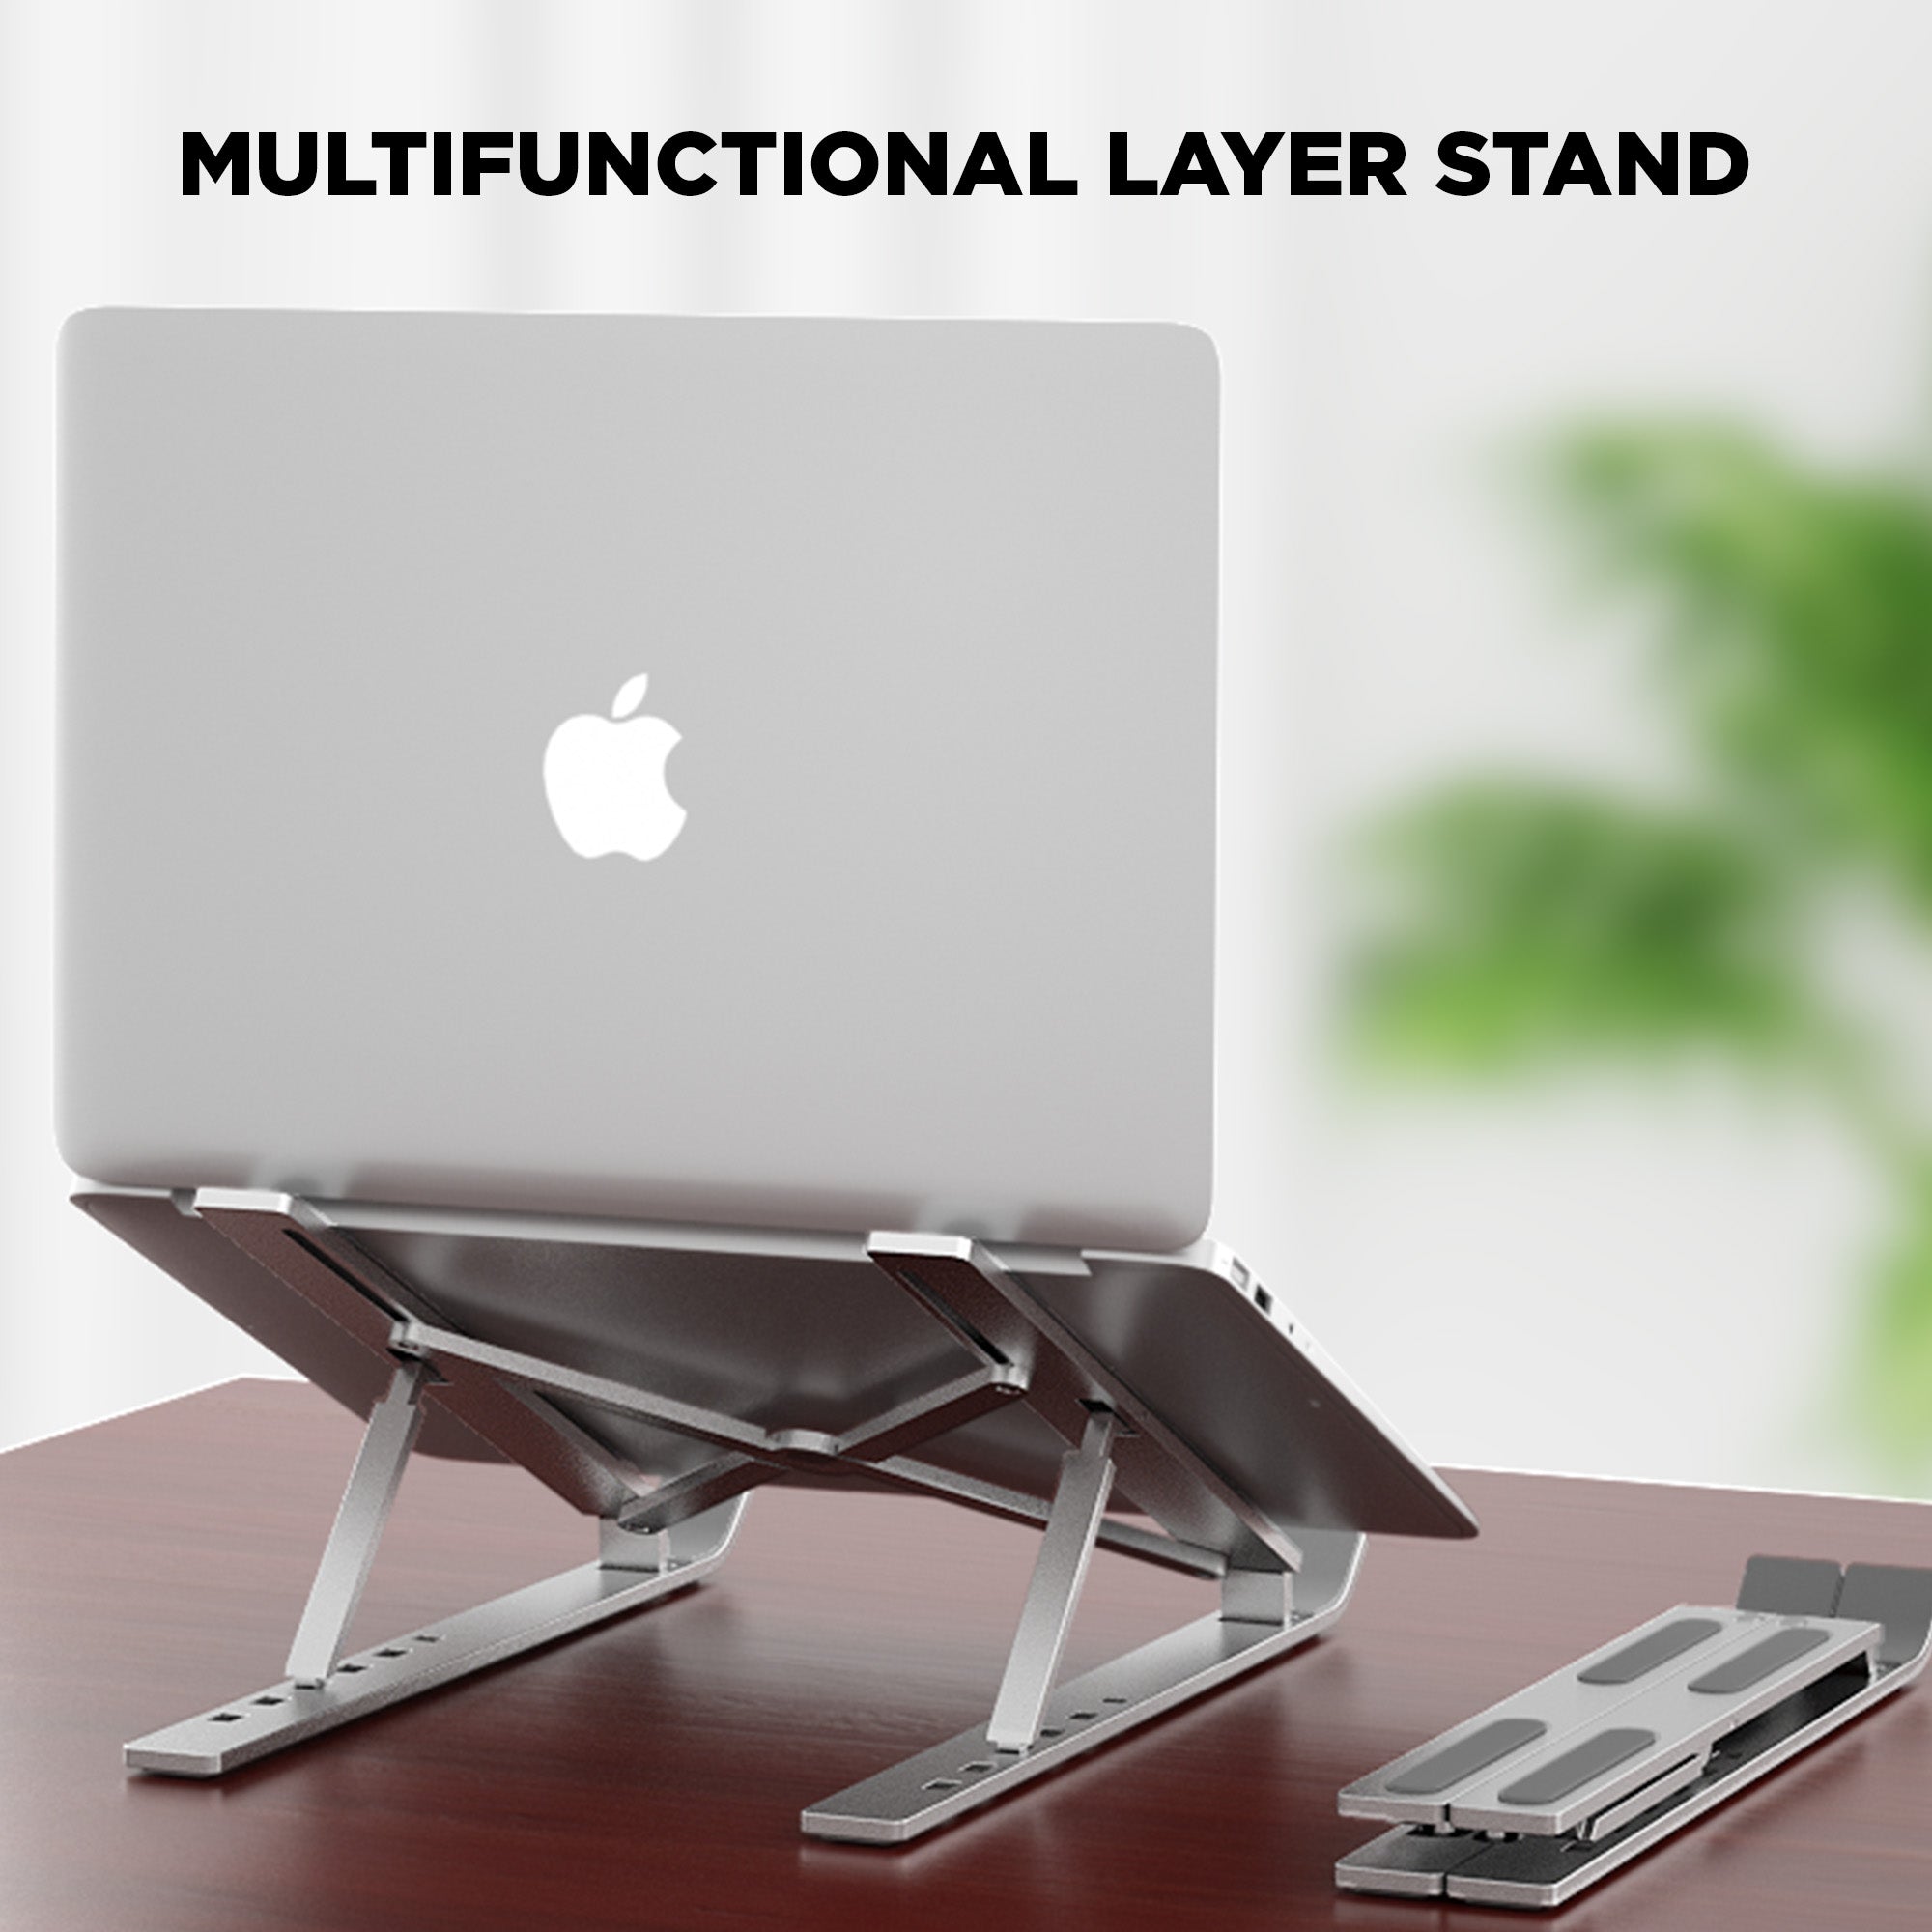 Gizmore Aluminium Adjustable Desk and Floor GIZ LS10 Laptop Stand